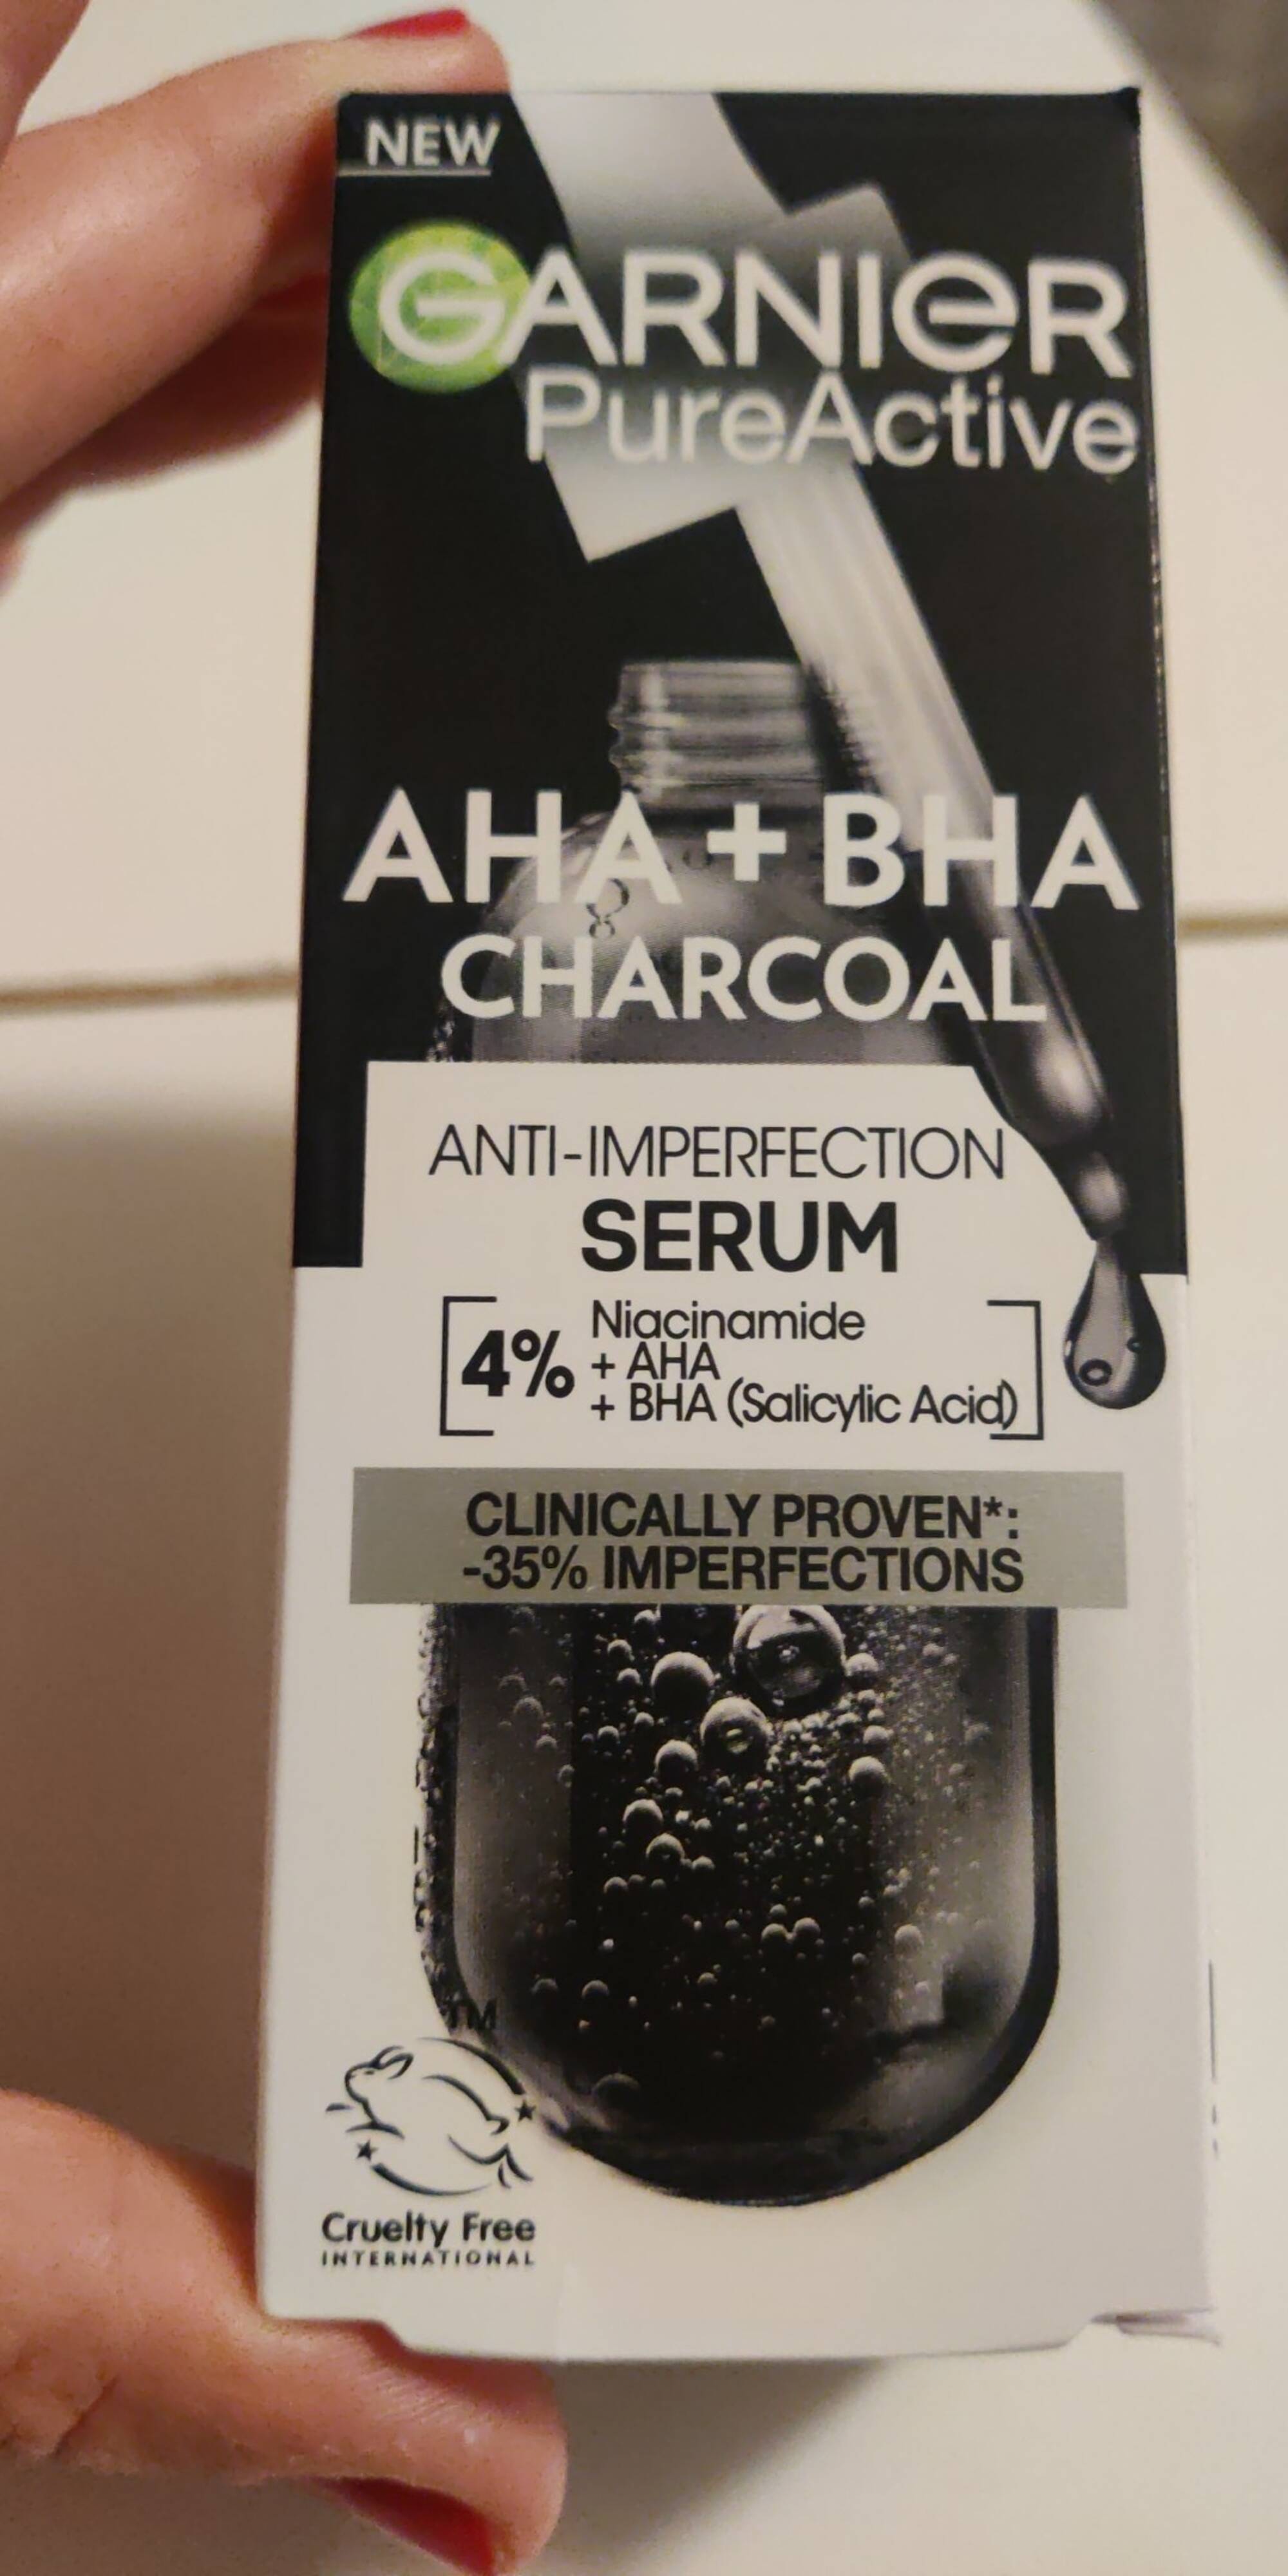 GARNIER - PureActive - Anti-imperfection serum AHA + BHA charcoal